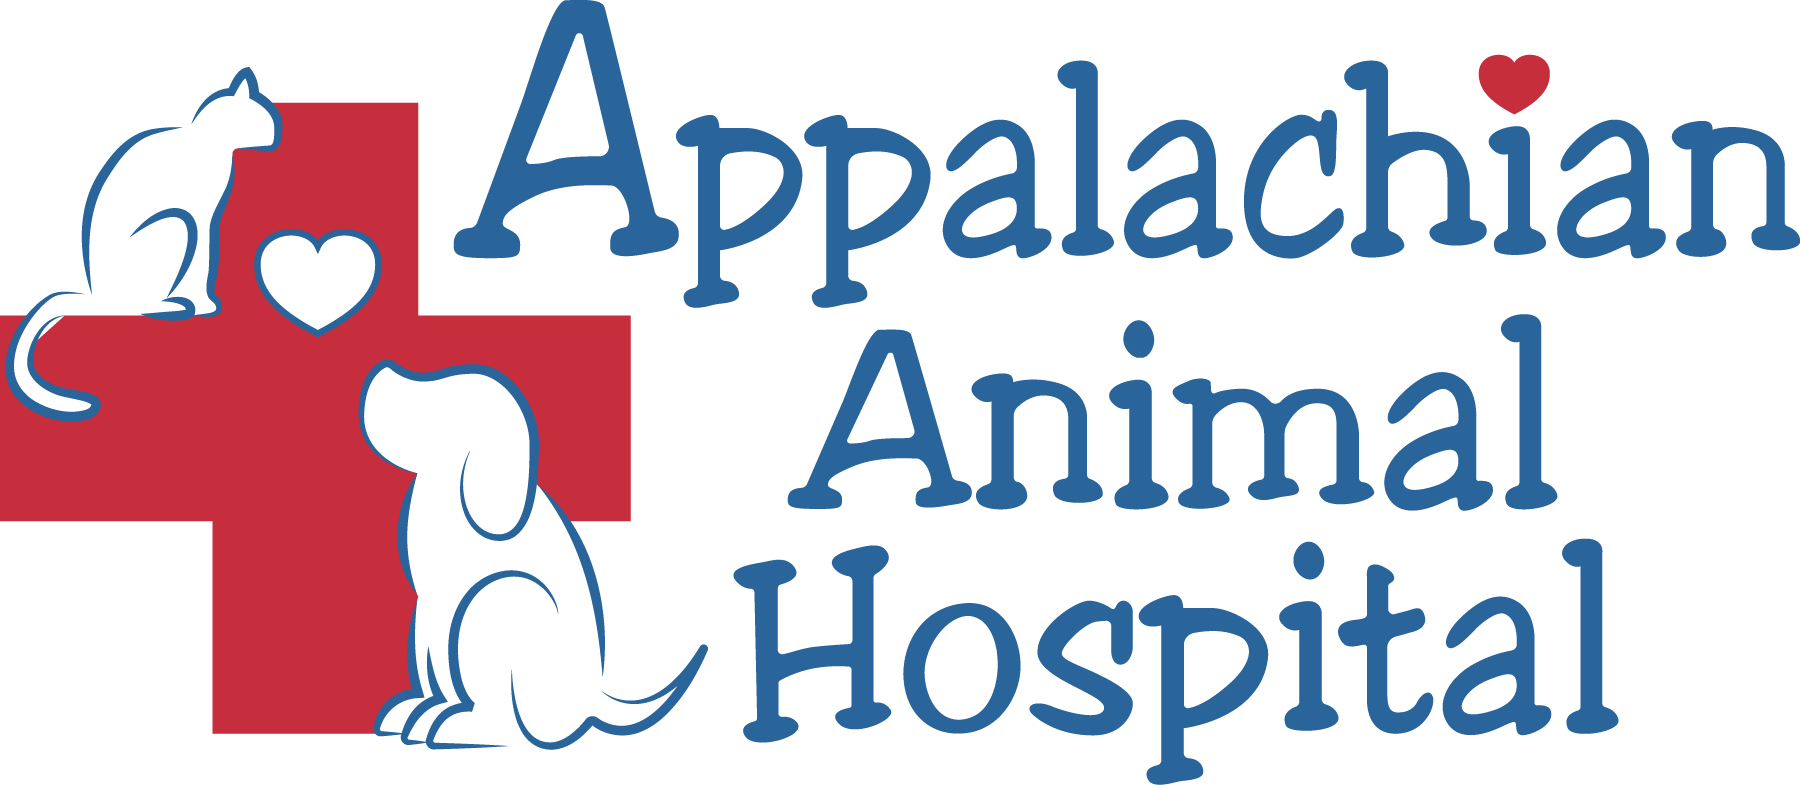 Appalachian Animal Hospital logo